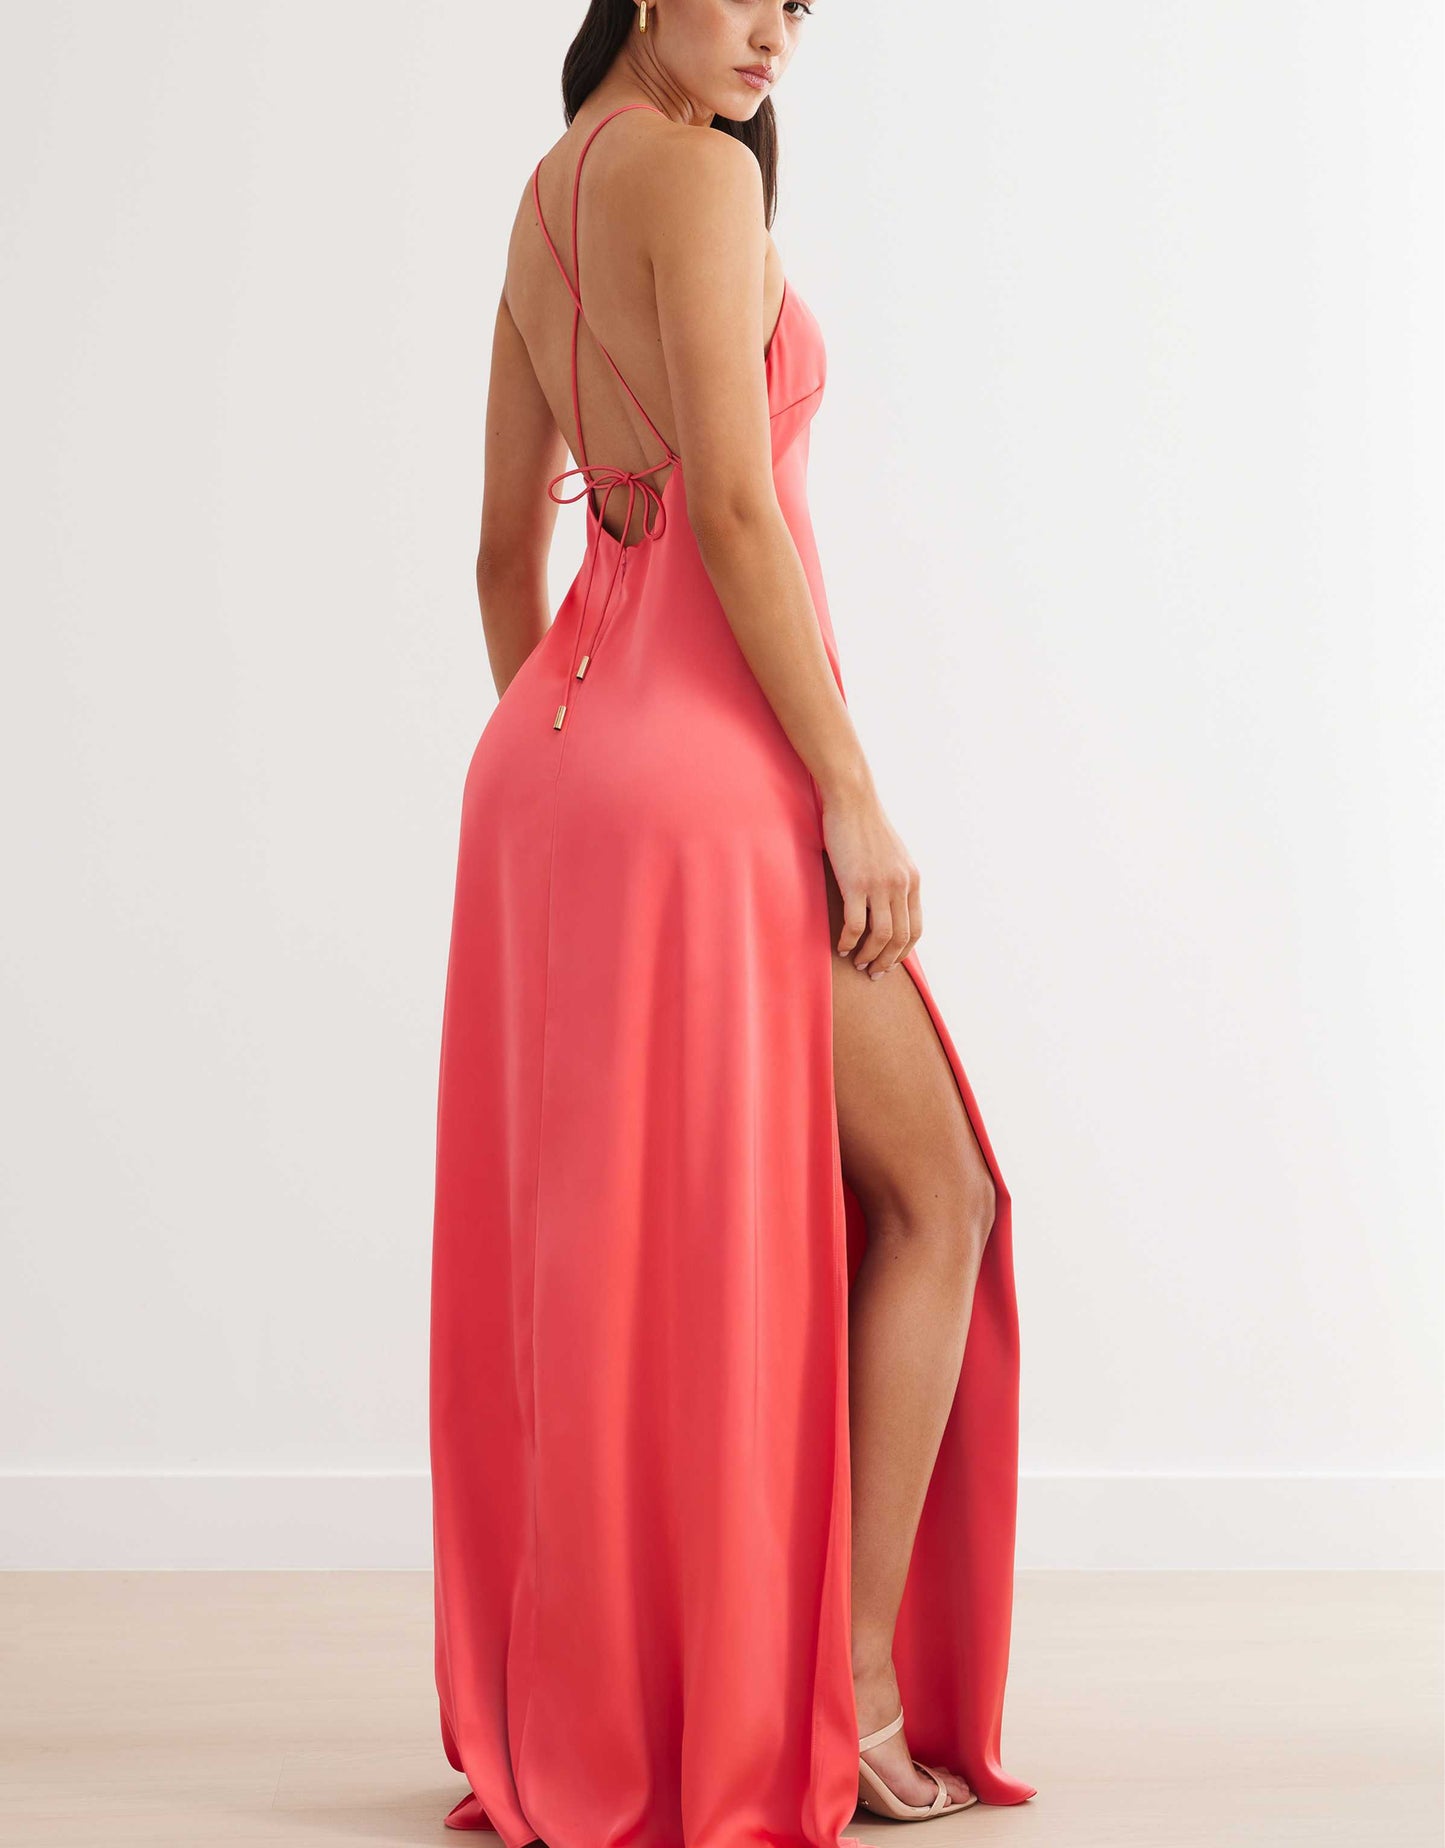 Lexi - Bali Dress, Flamingo